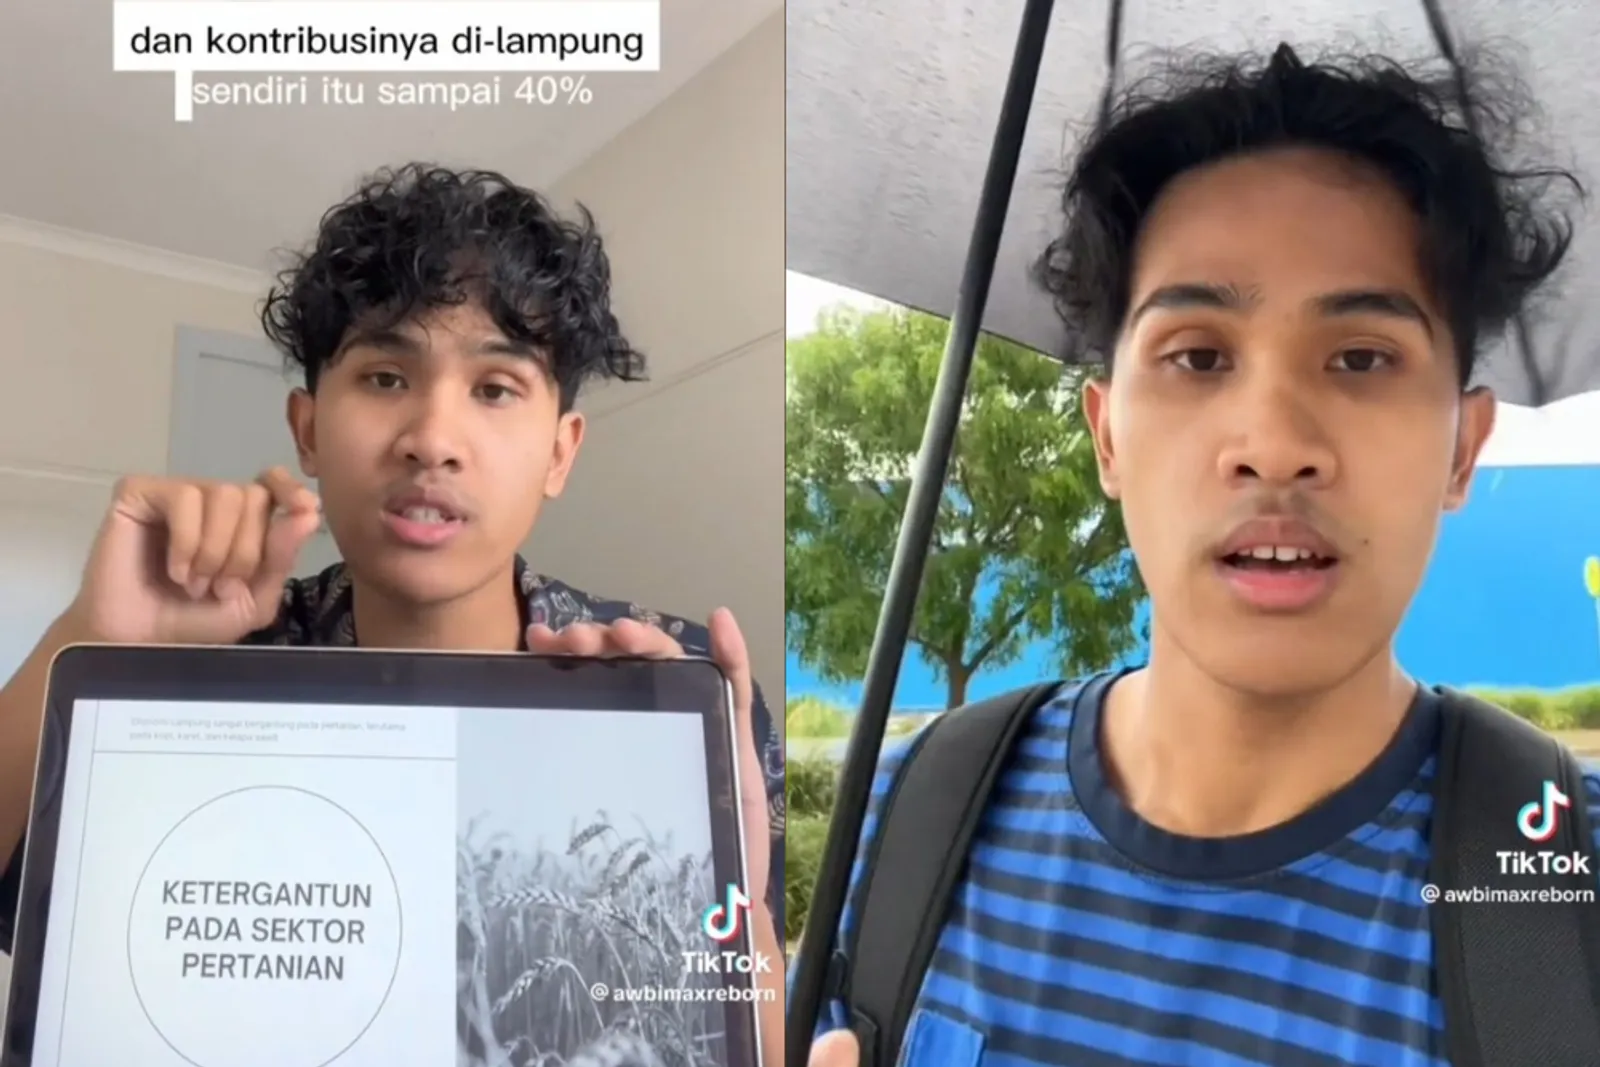 Profil Bima Yudho, Kreator TikTok yang Kritik Kondisi Kota Lampung